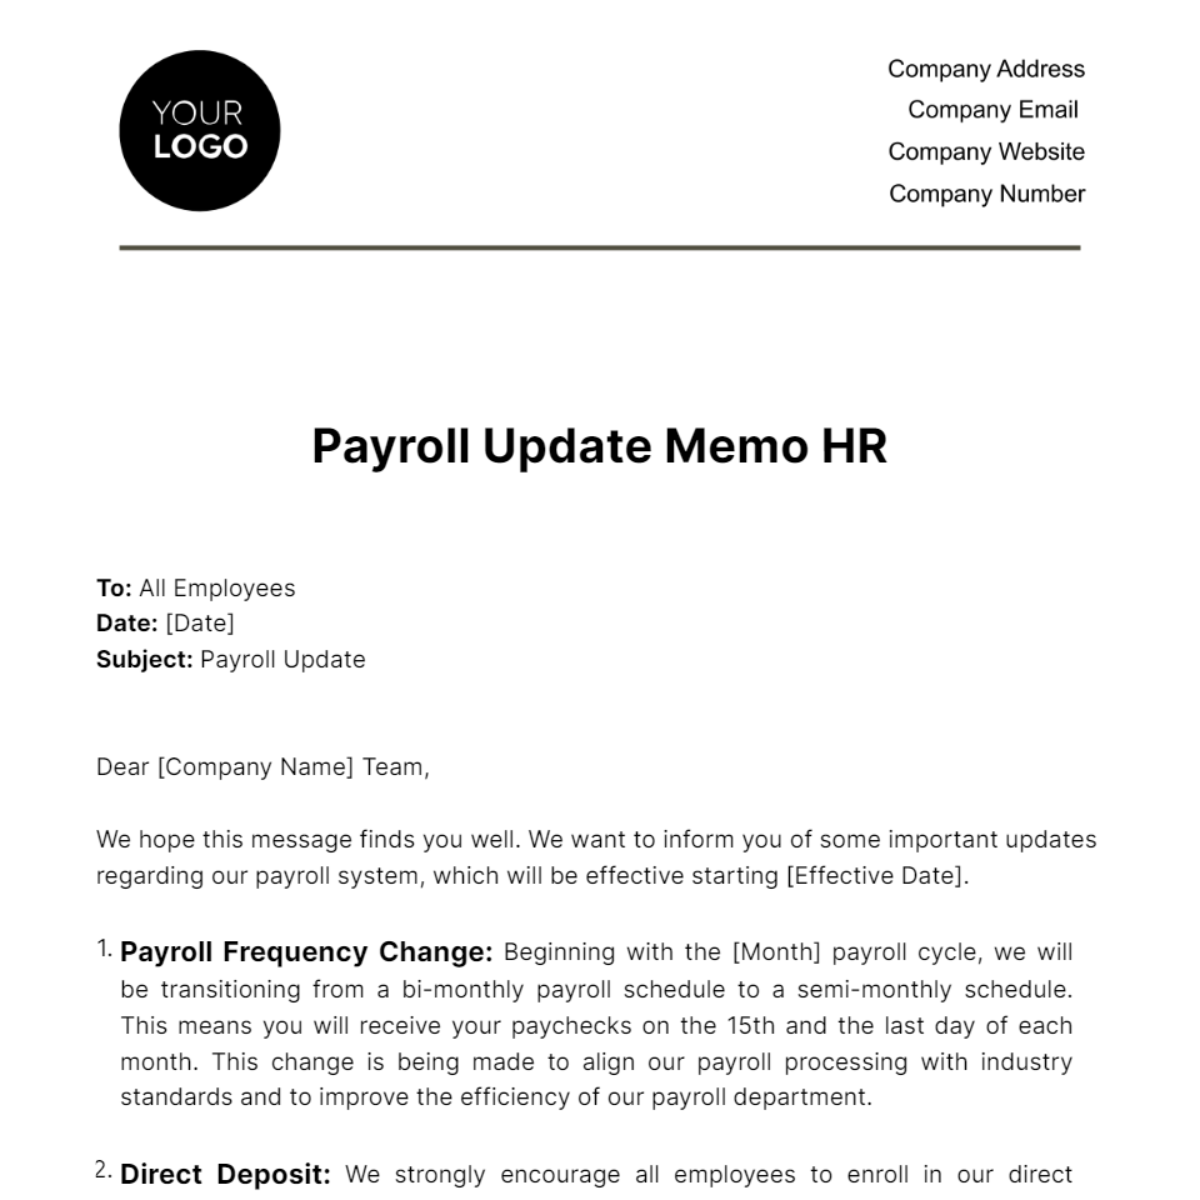 Payroll Update Memo HR Template